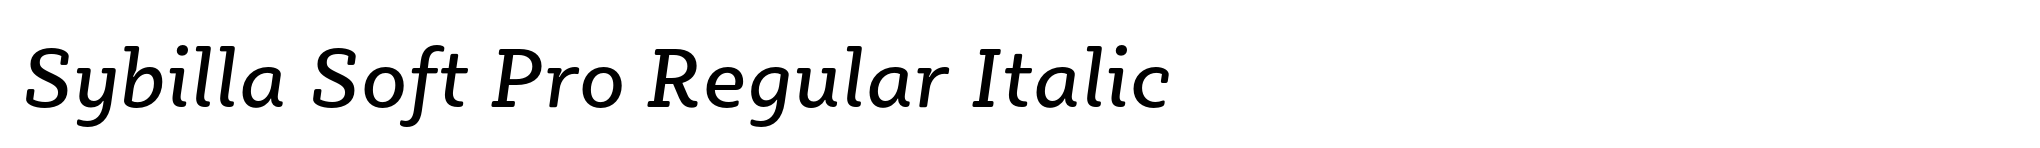 Sybilla Soft Pro Regular Italic image